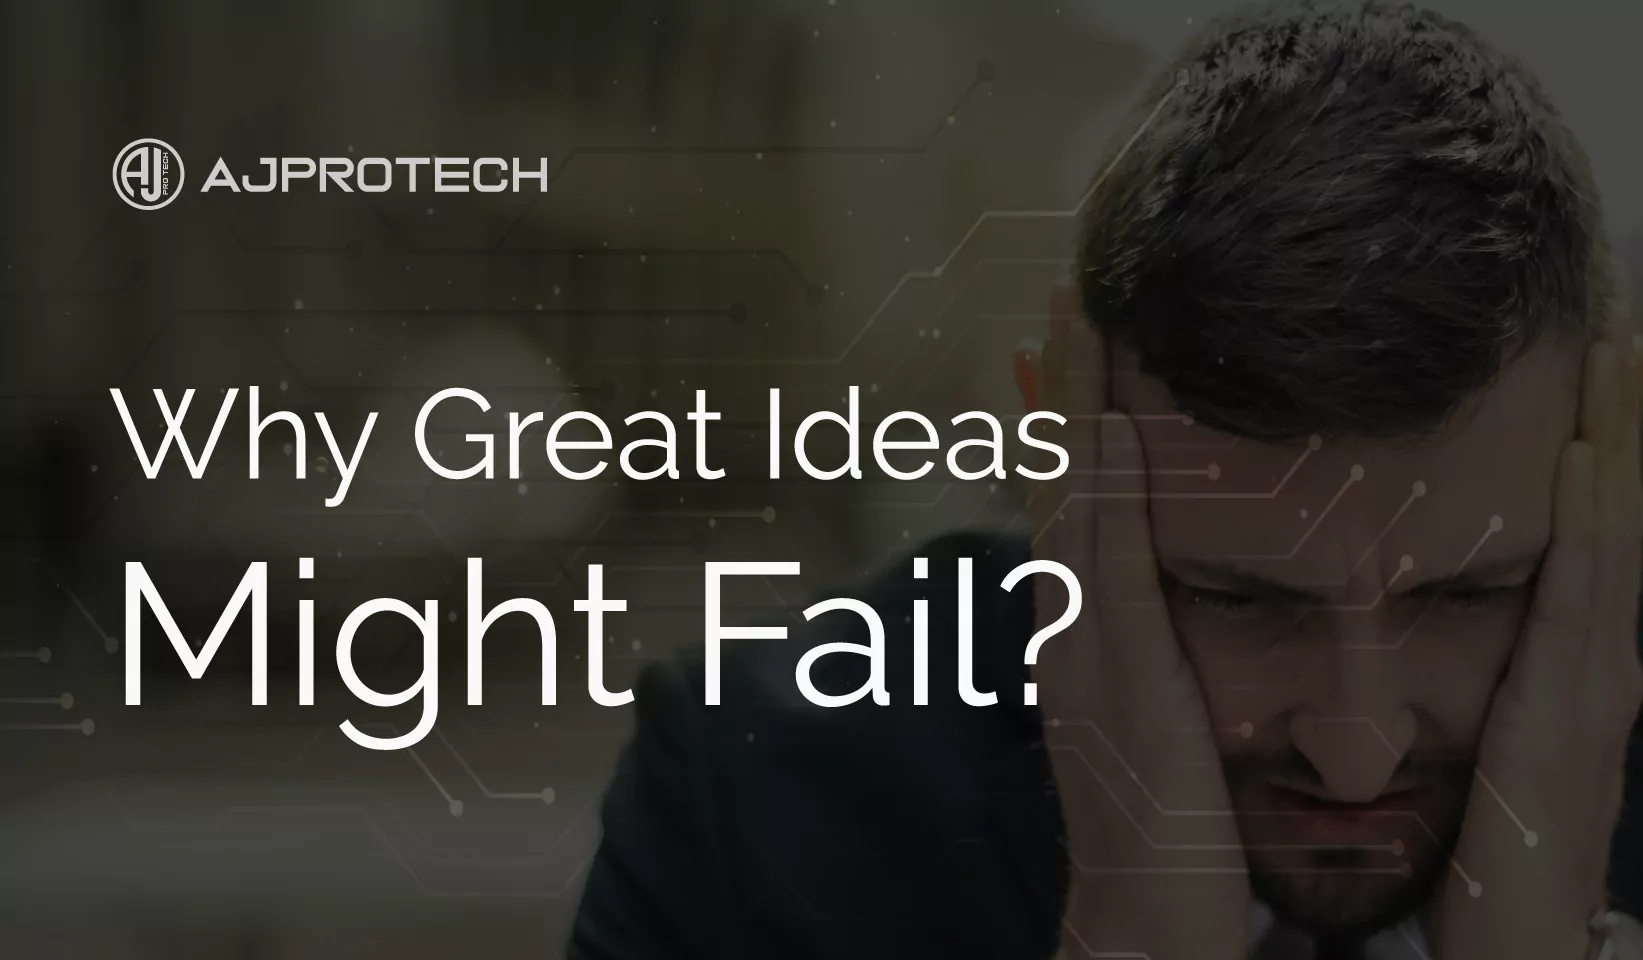 WHY GREAT IDEAS MIGHT FAIL